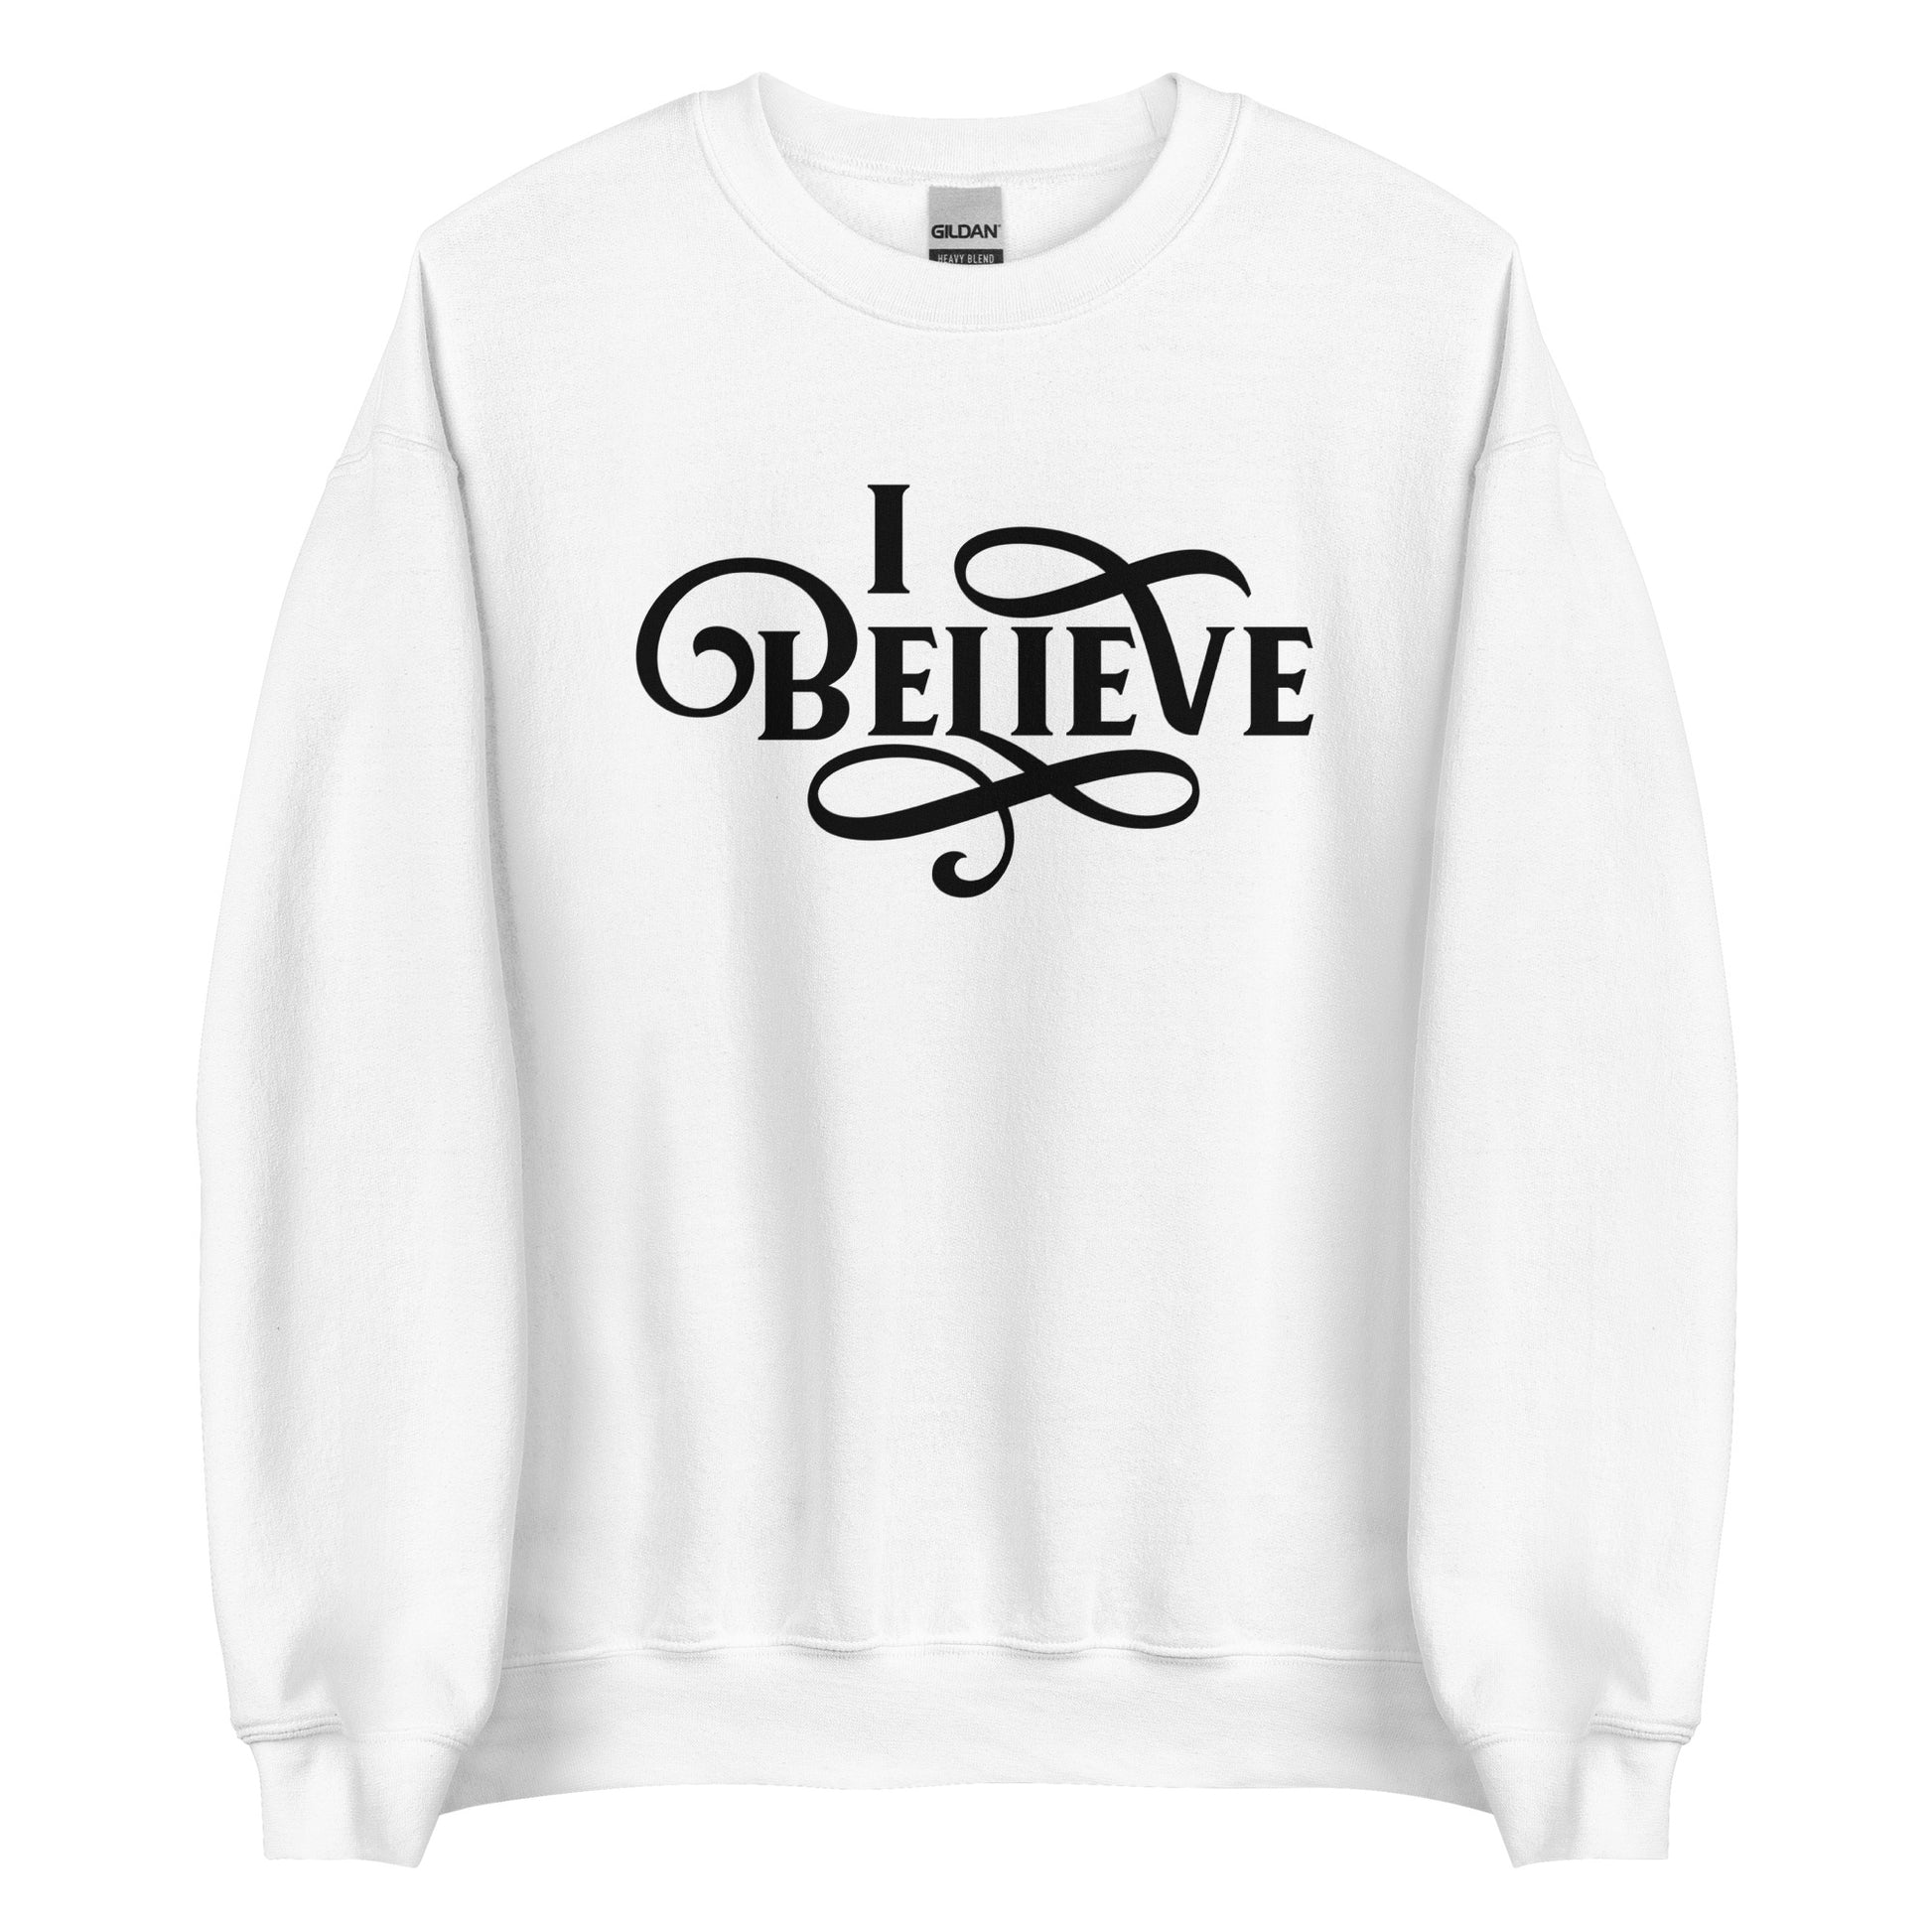 I Believe Swirl Christian aesthetic Jesus believer design printed in black on soft white unisex crewneck sweatshirt for women, great gift for her